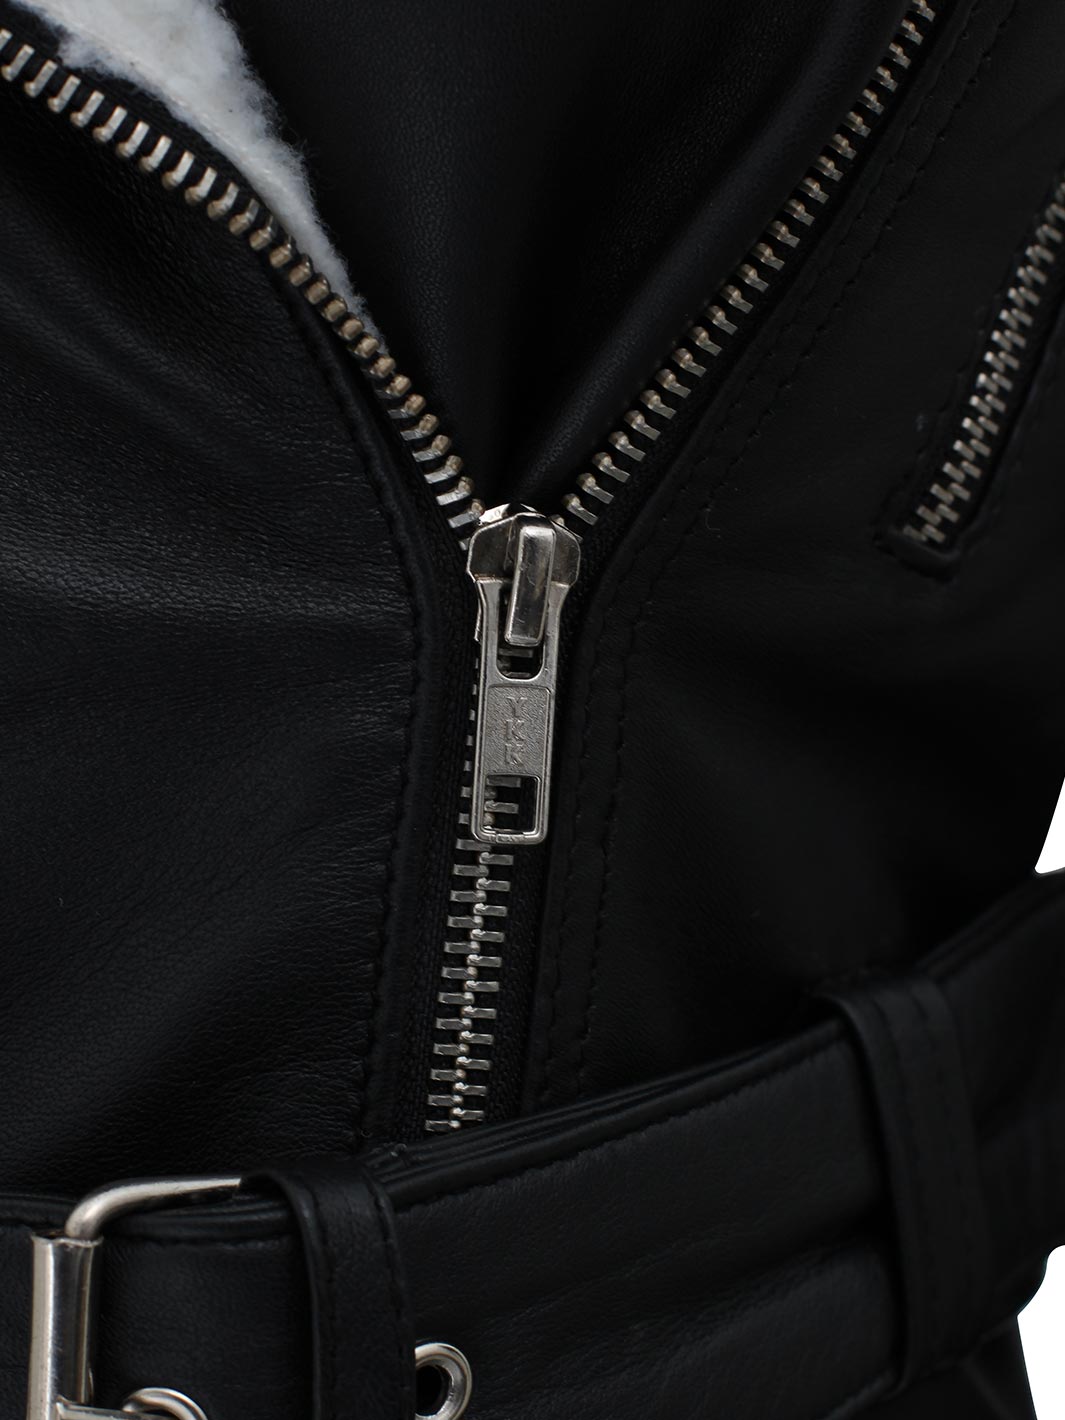  shearling leather jacket black